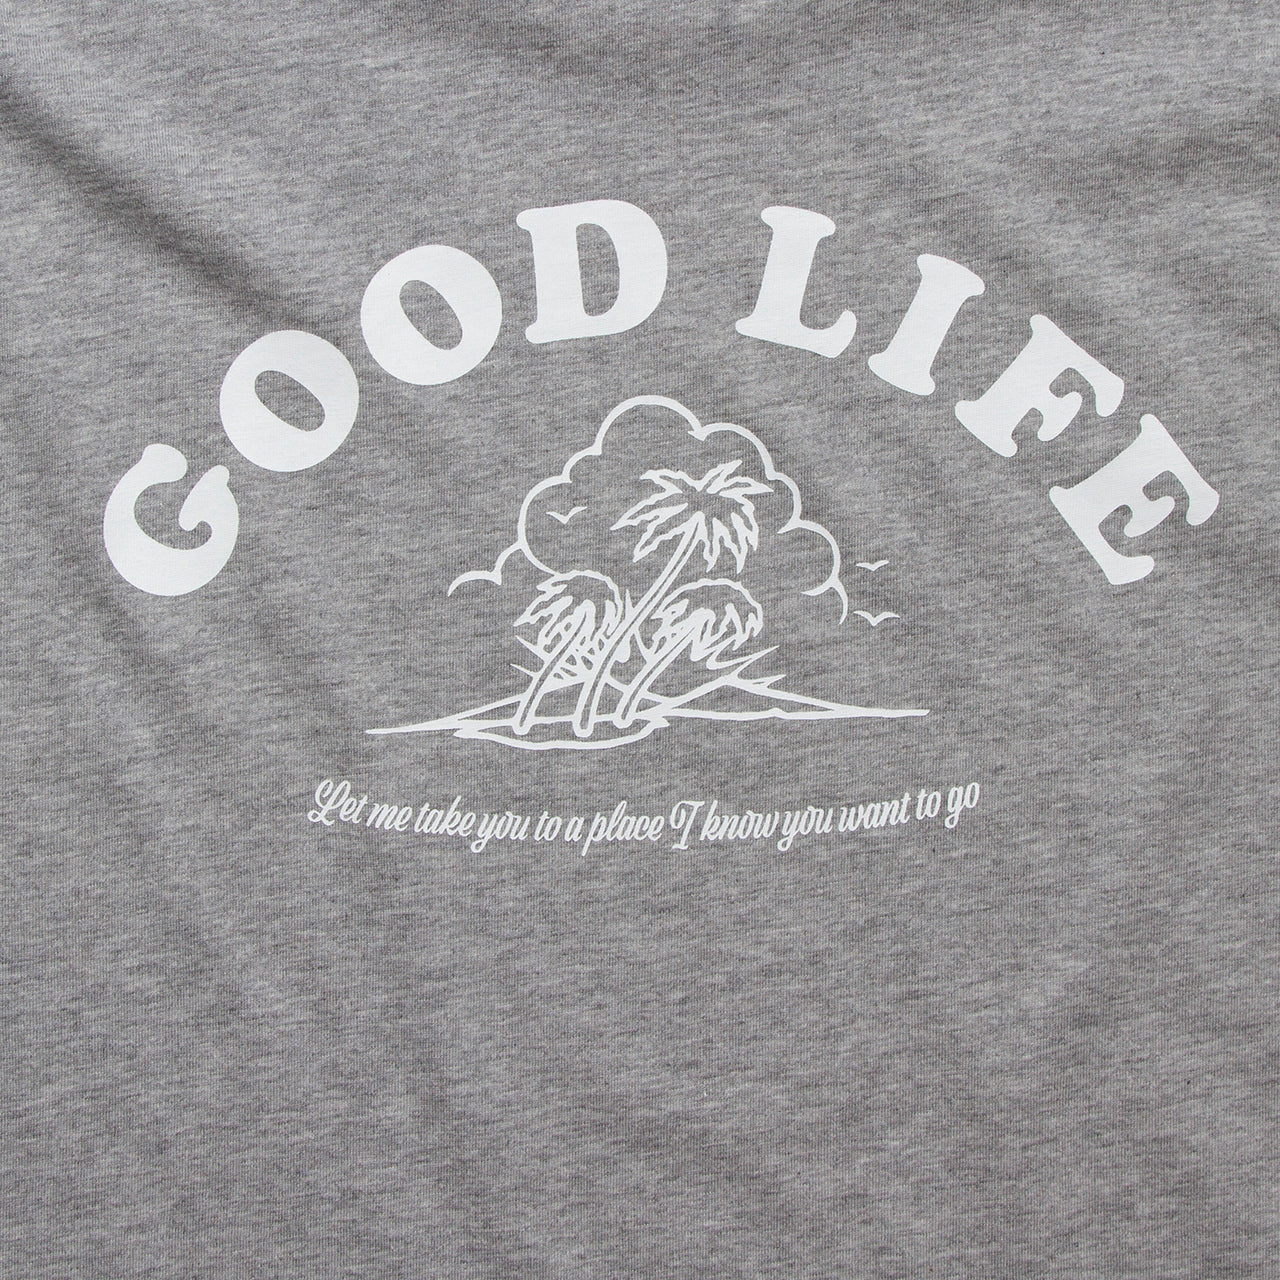 Good Life - Tshirt - Grey